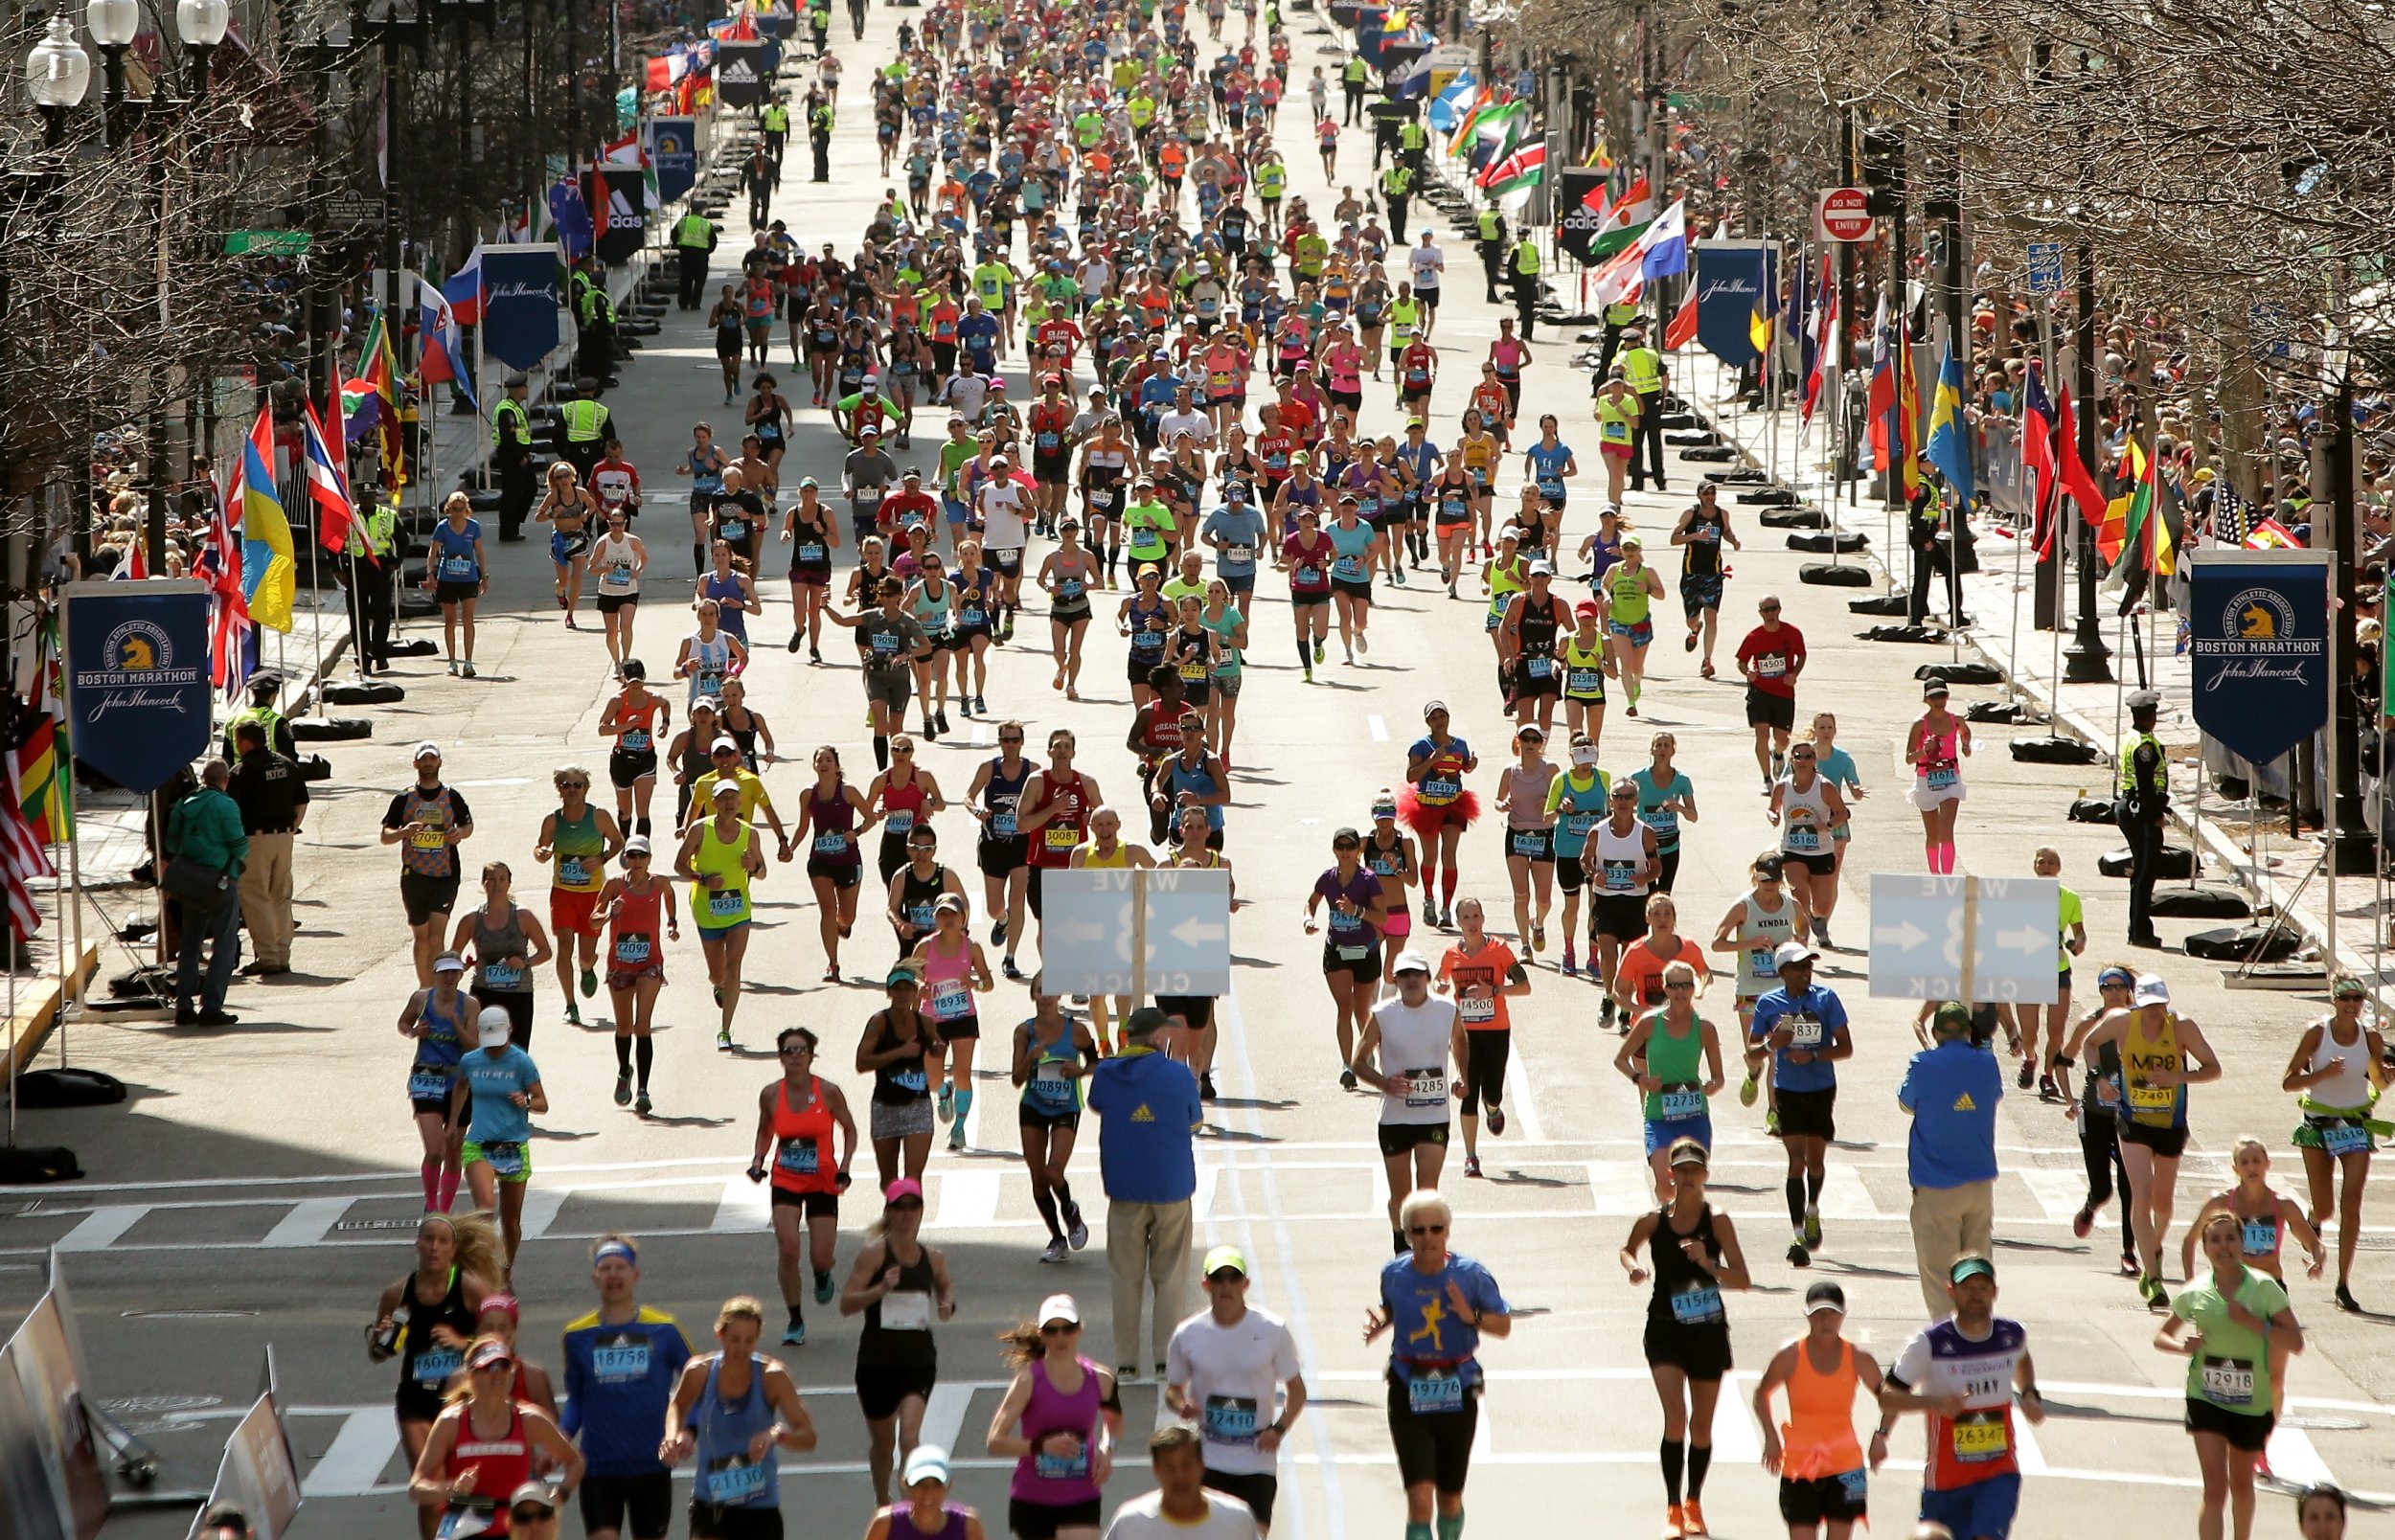 Boston Marathon 2019 Live Results, Winners, Updates From Elite